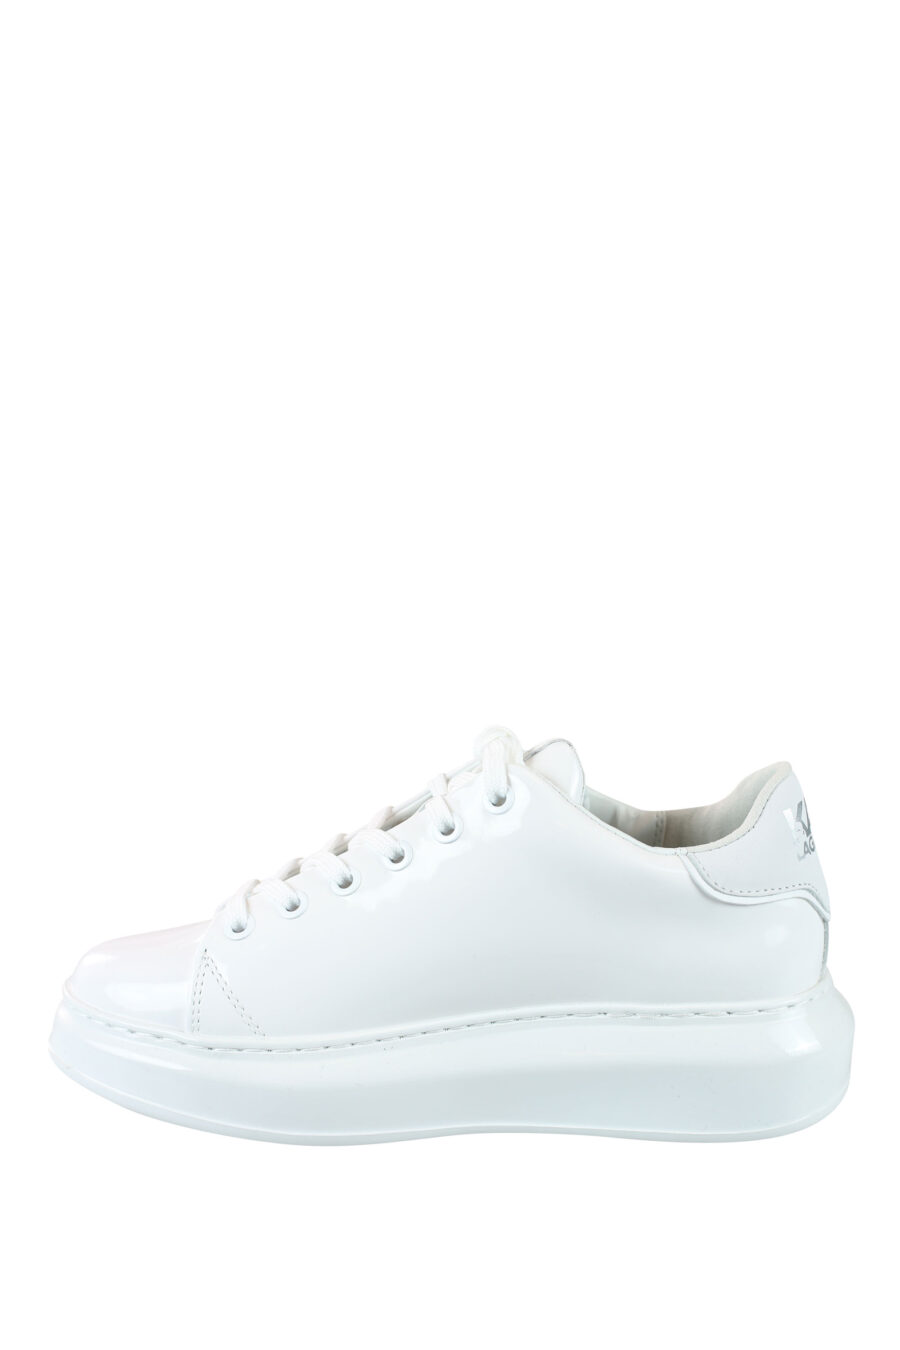 Zapatillas blancas brillantes con logo lettering "rue st guillaume" - IMG 0016 1